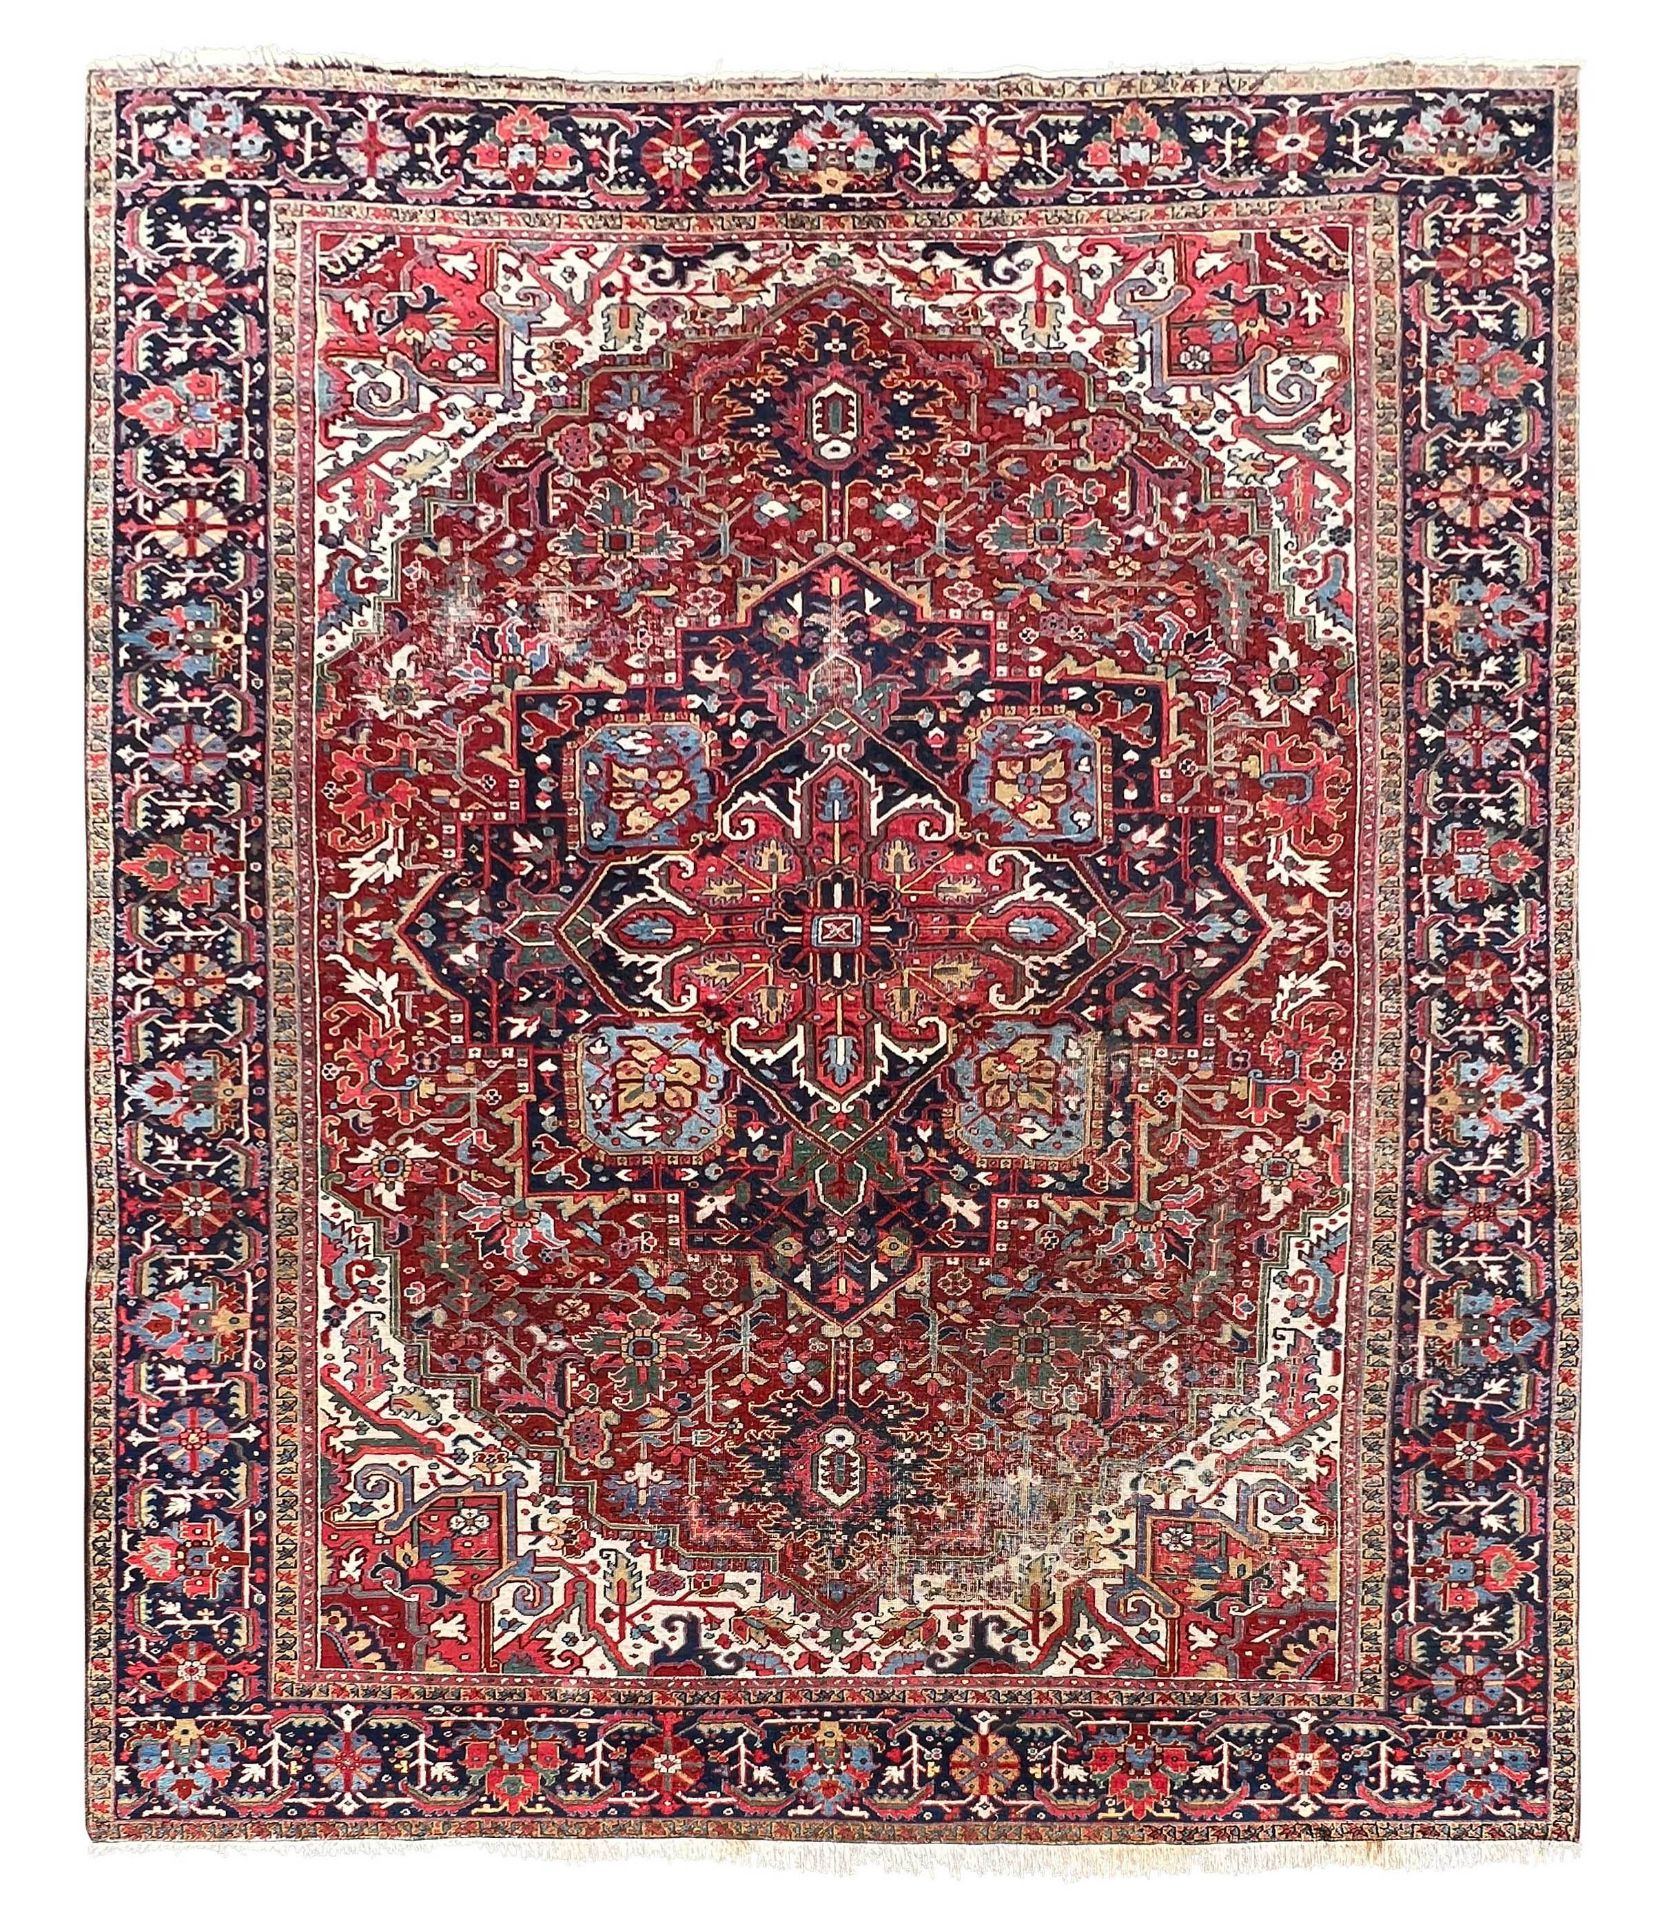 Heriz. Oriental carpet. Around 1910.